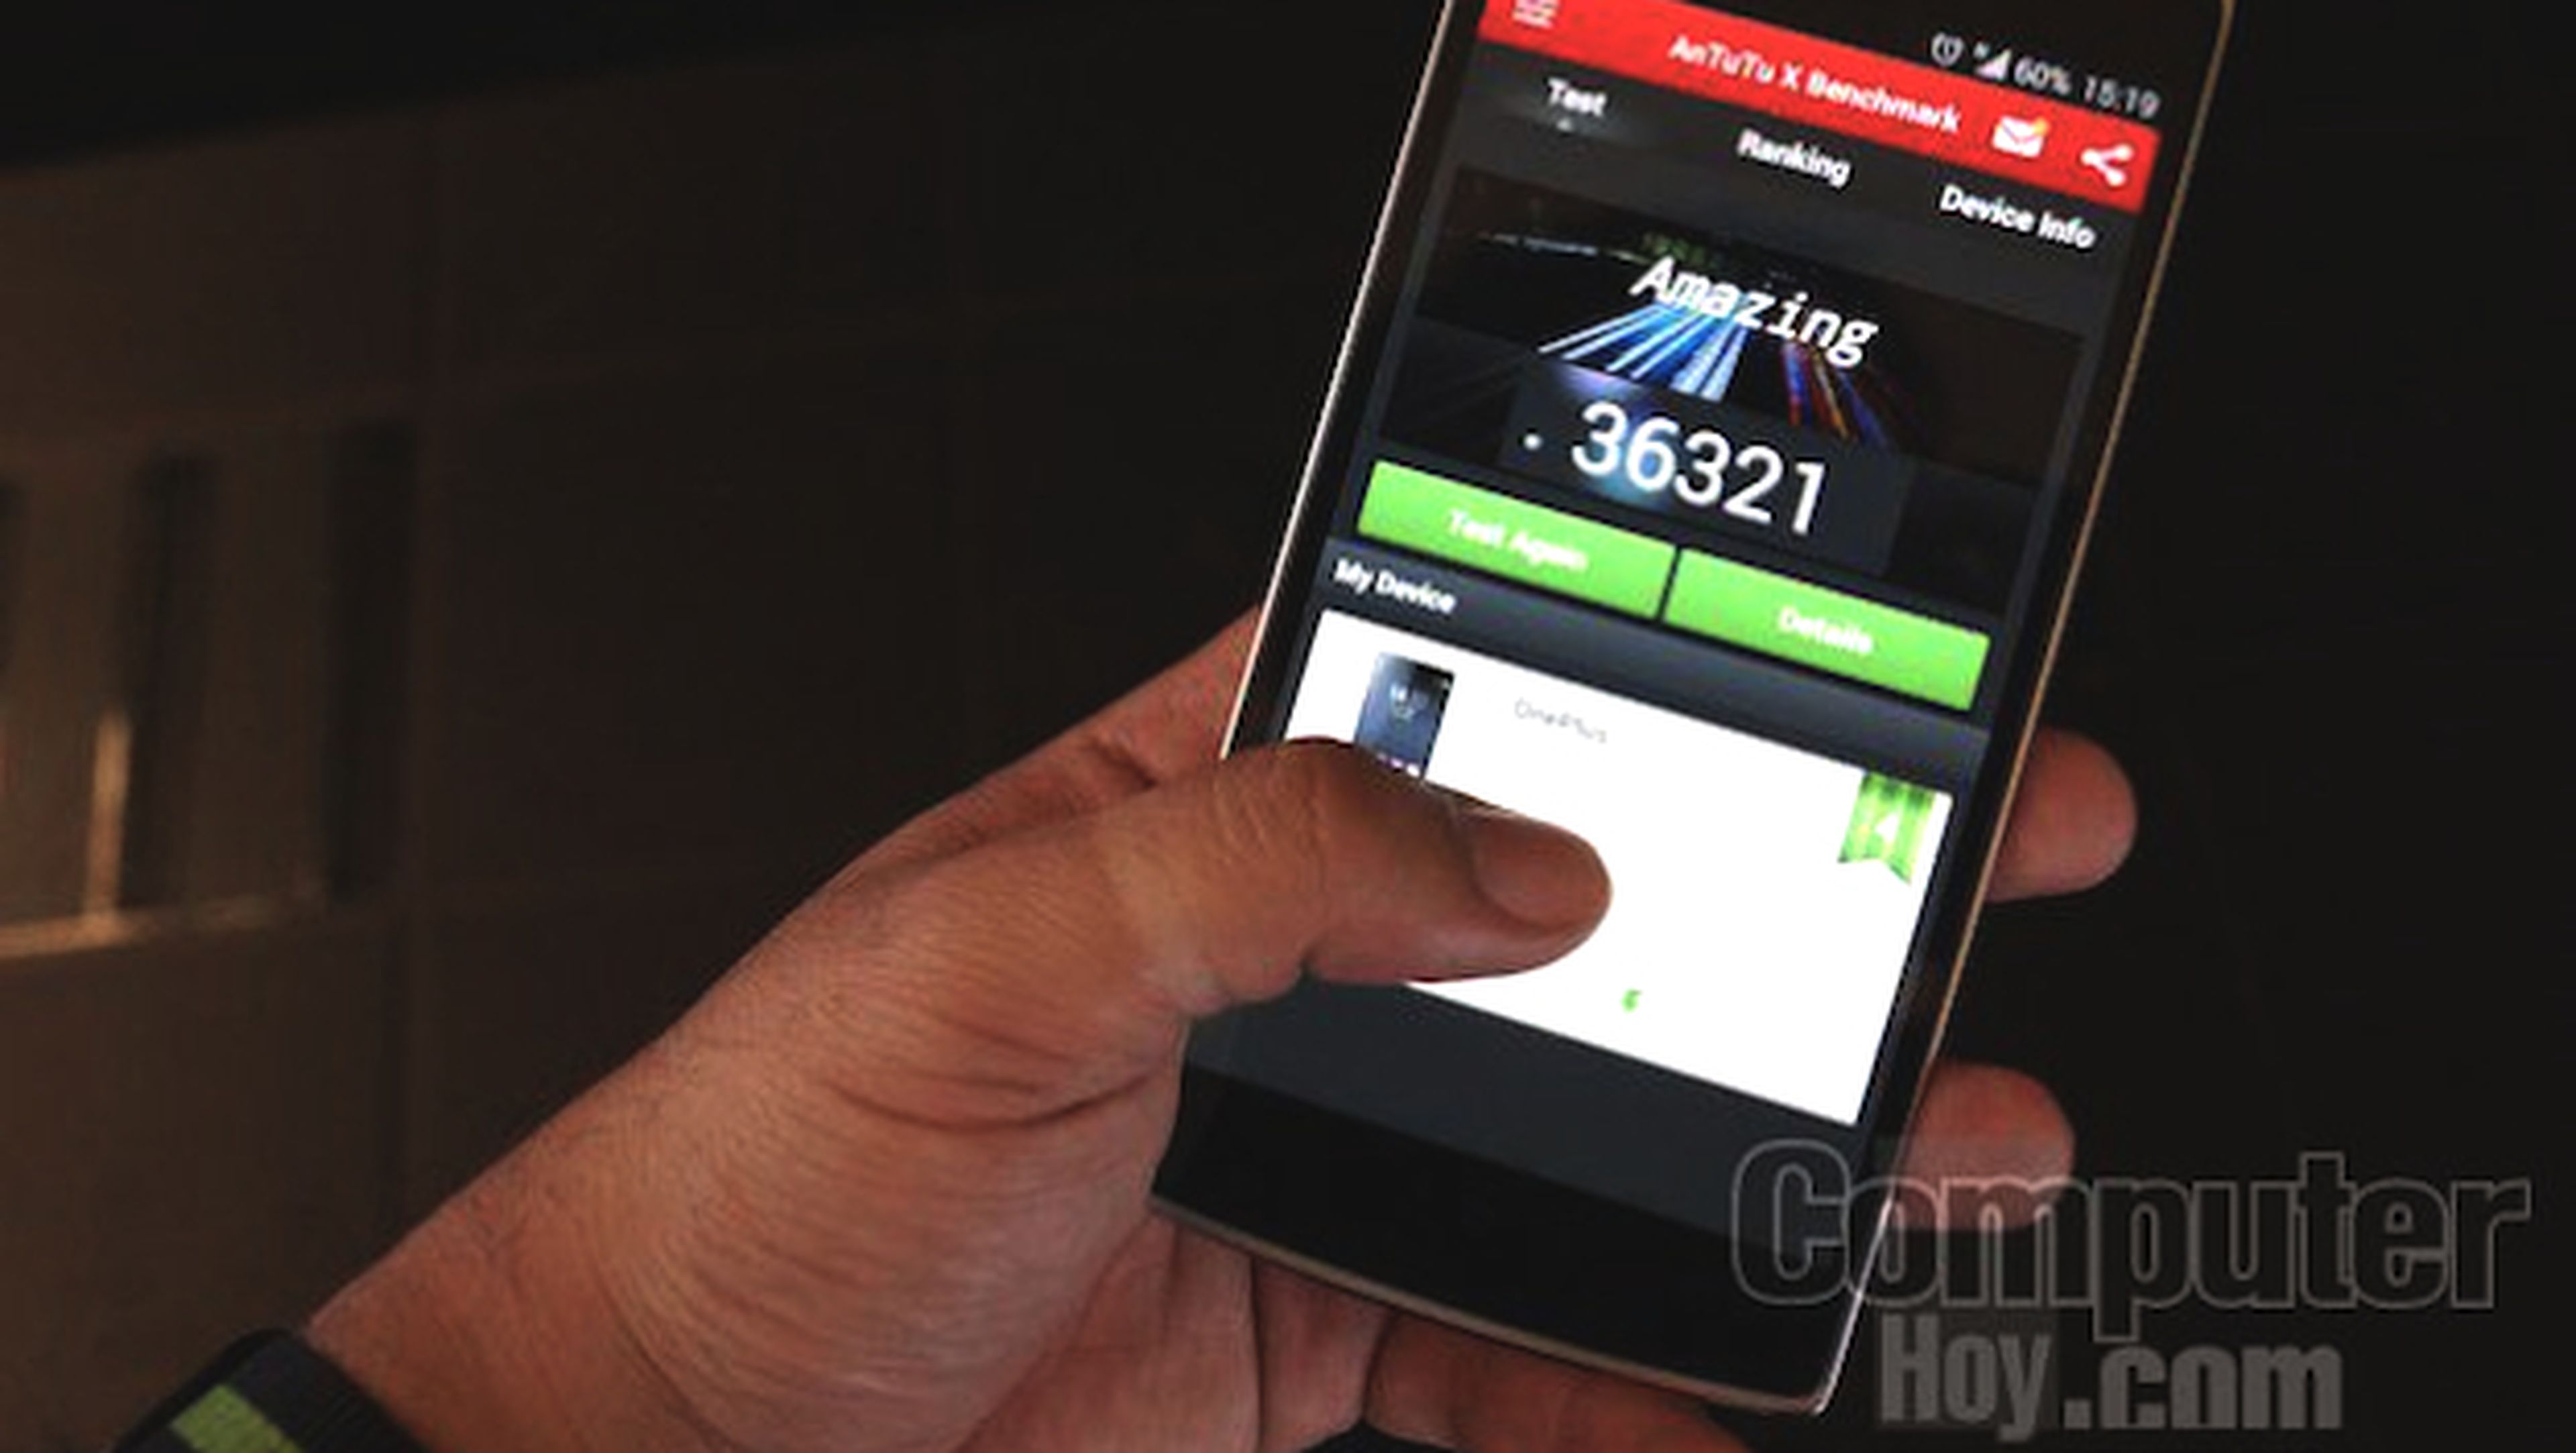 OnePlus da la bienvenida a iPhone 6 Plus regalando su móvil